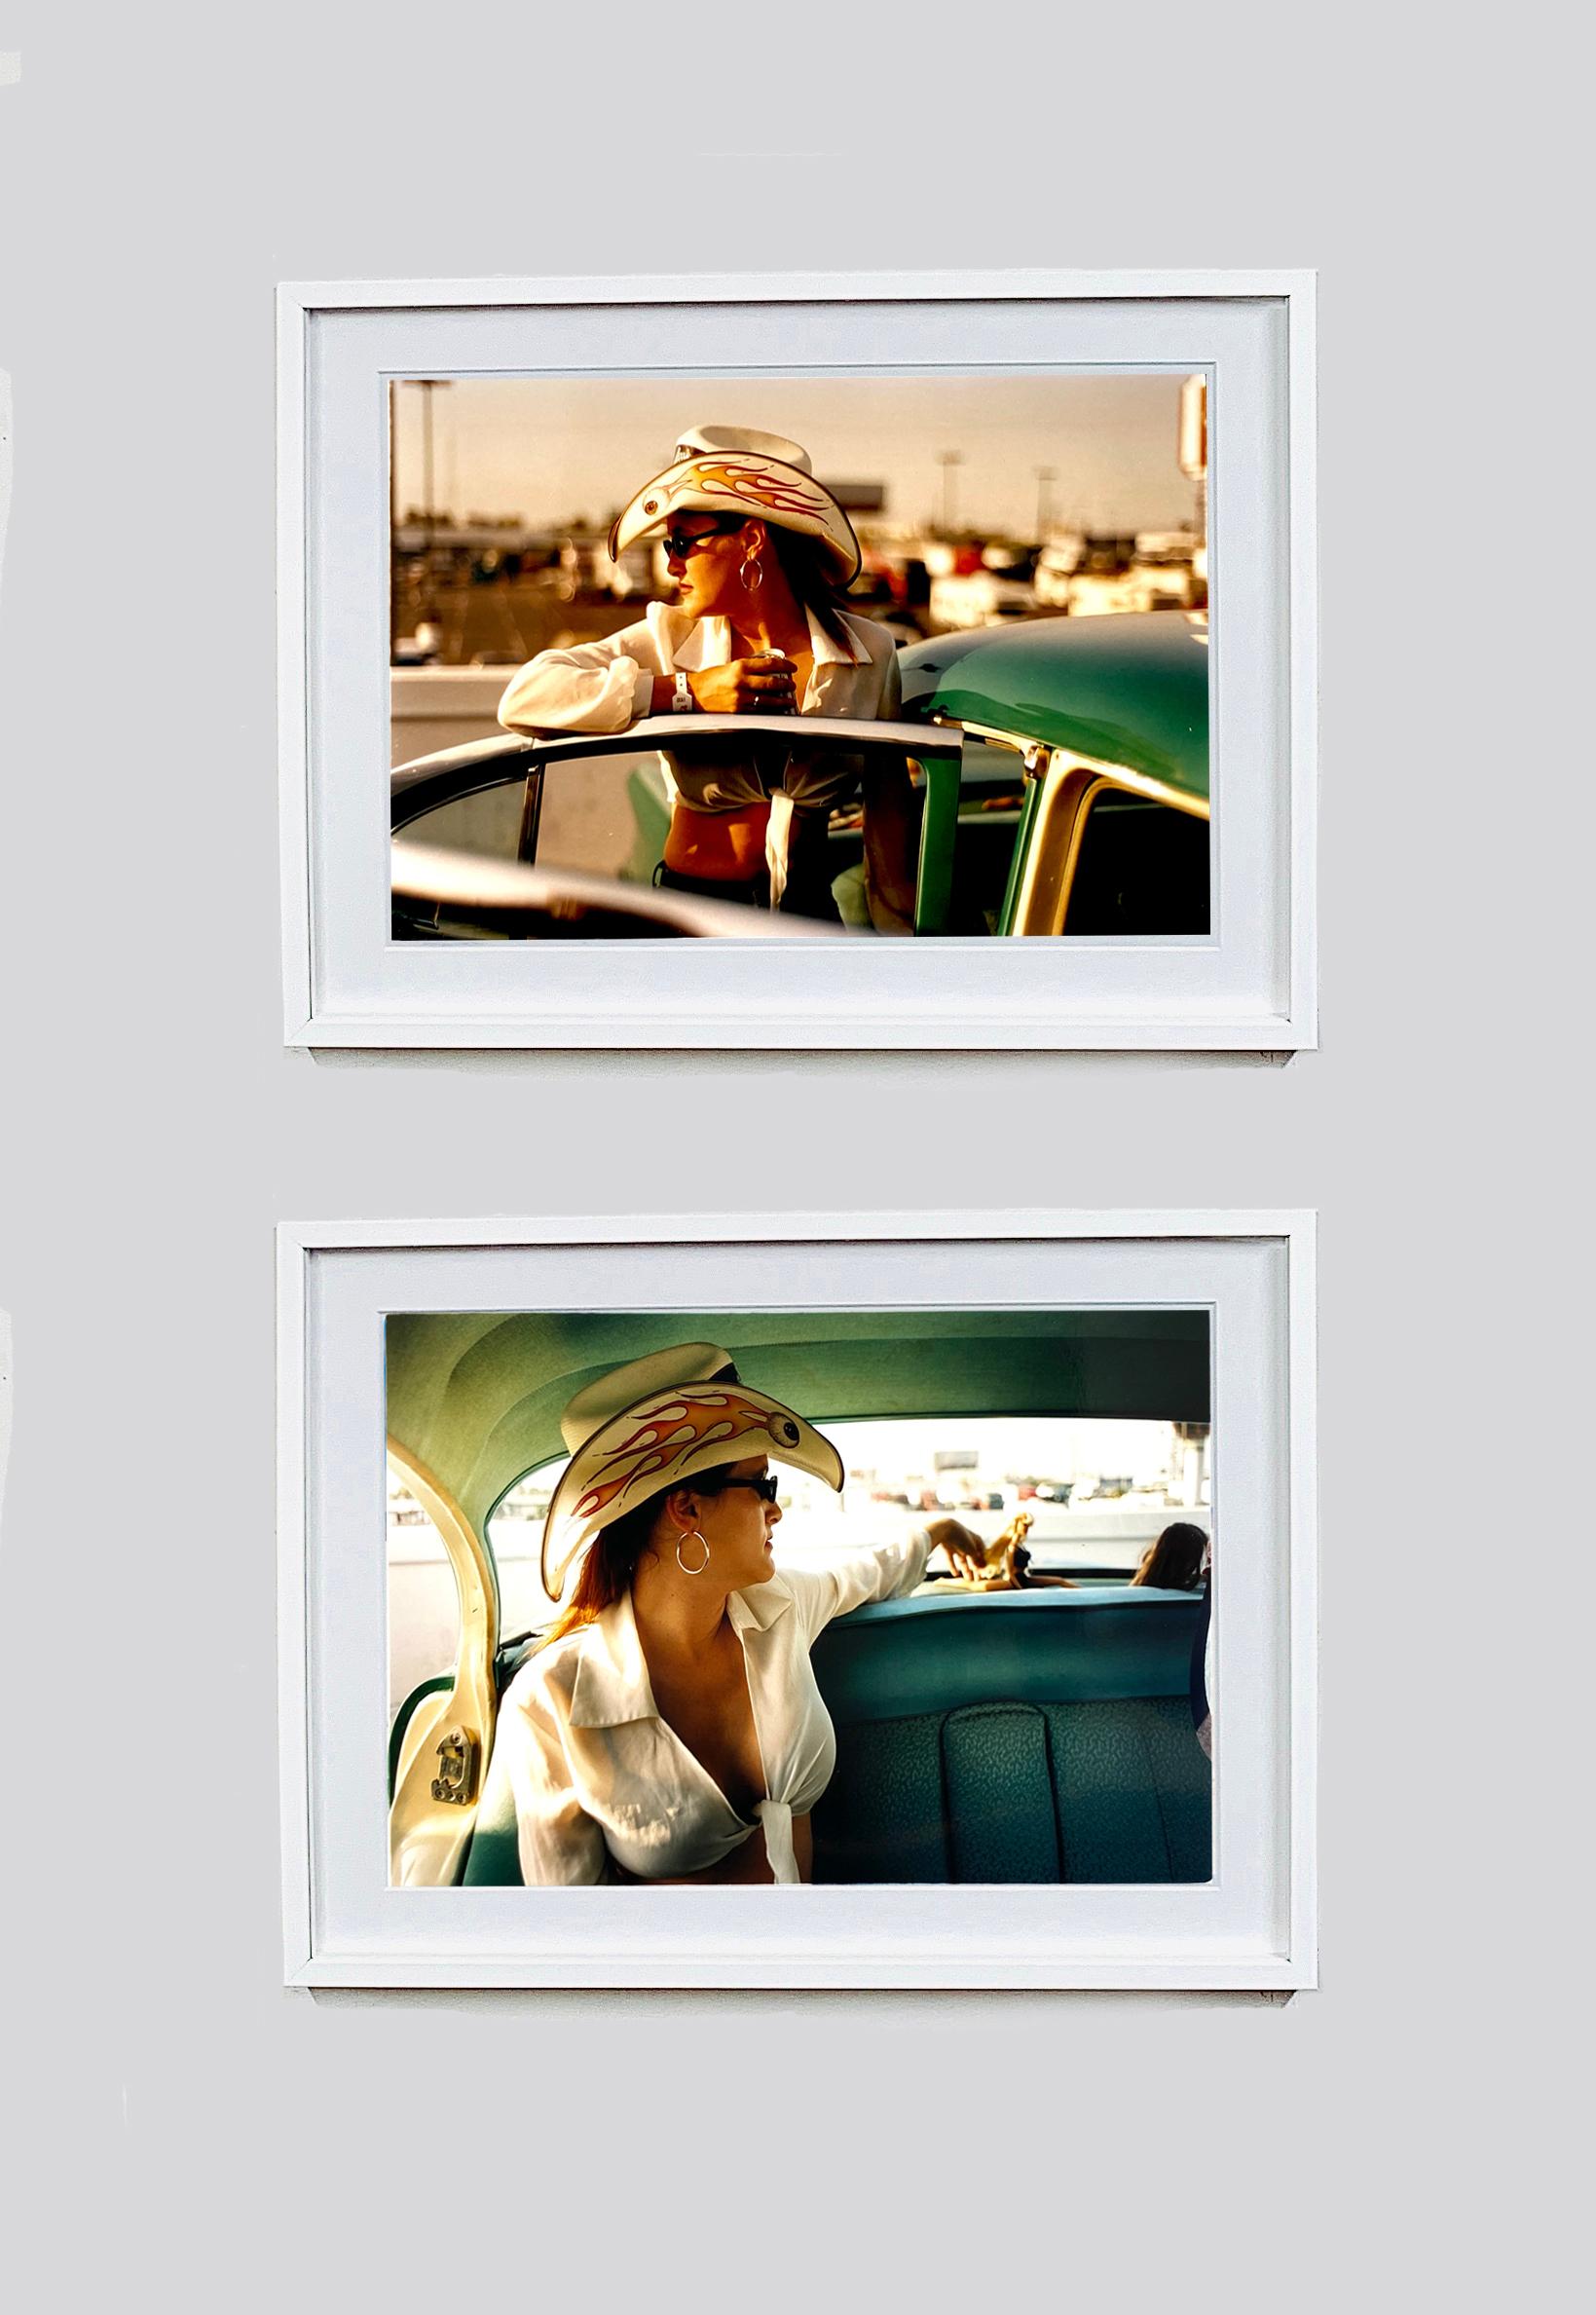 Wendy and Dolls, Las Vegas - Contemporary Portrait Color Photography For Sale 3